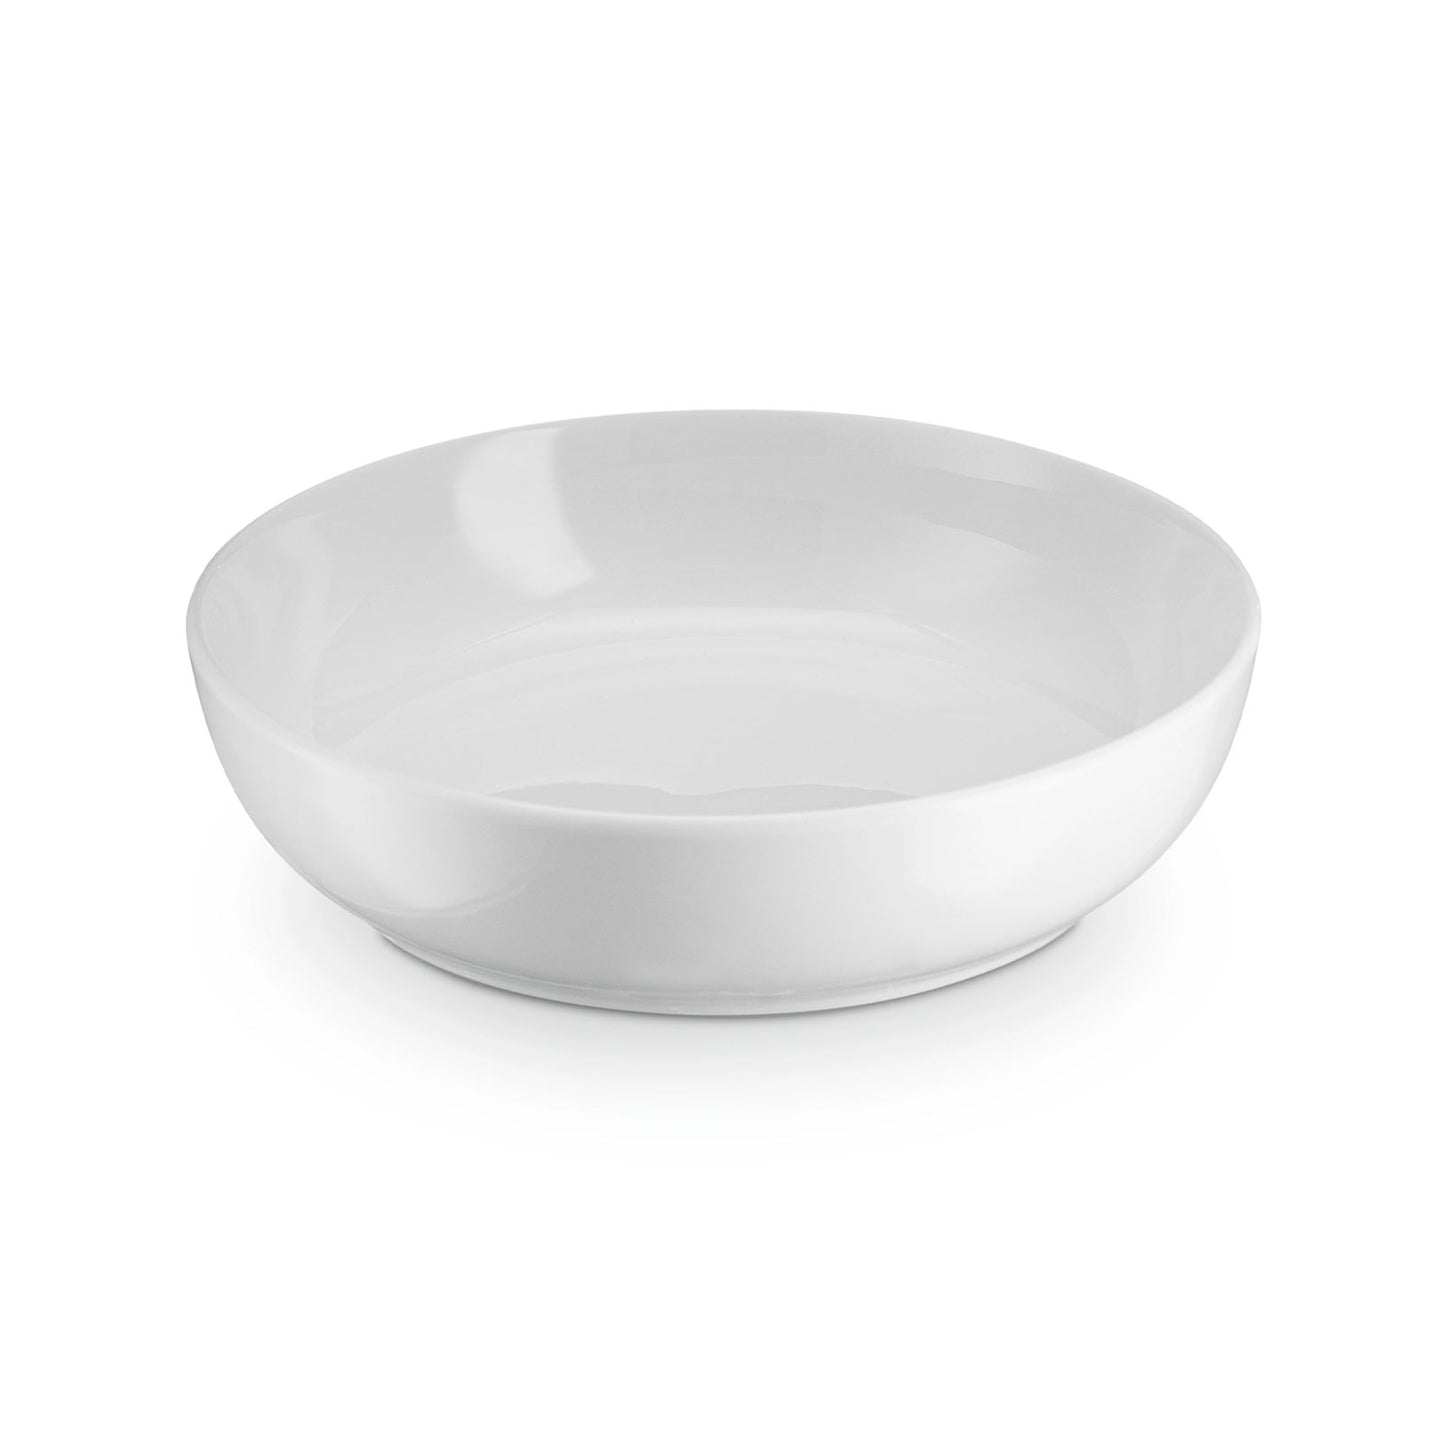 Ceramic Pasta Bowls in White, Set of 4